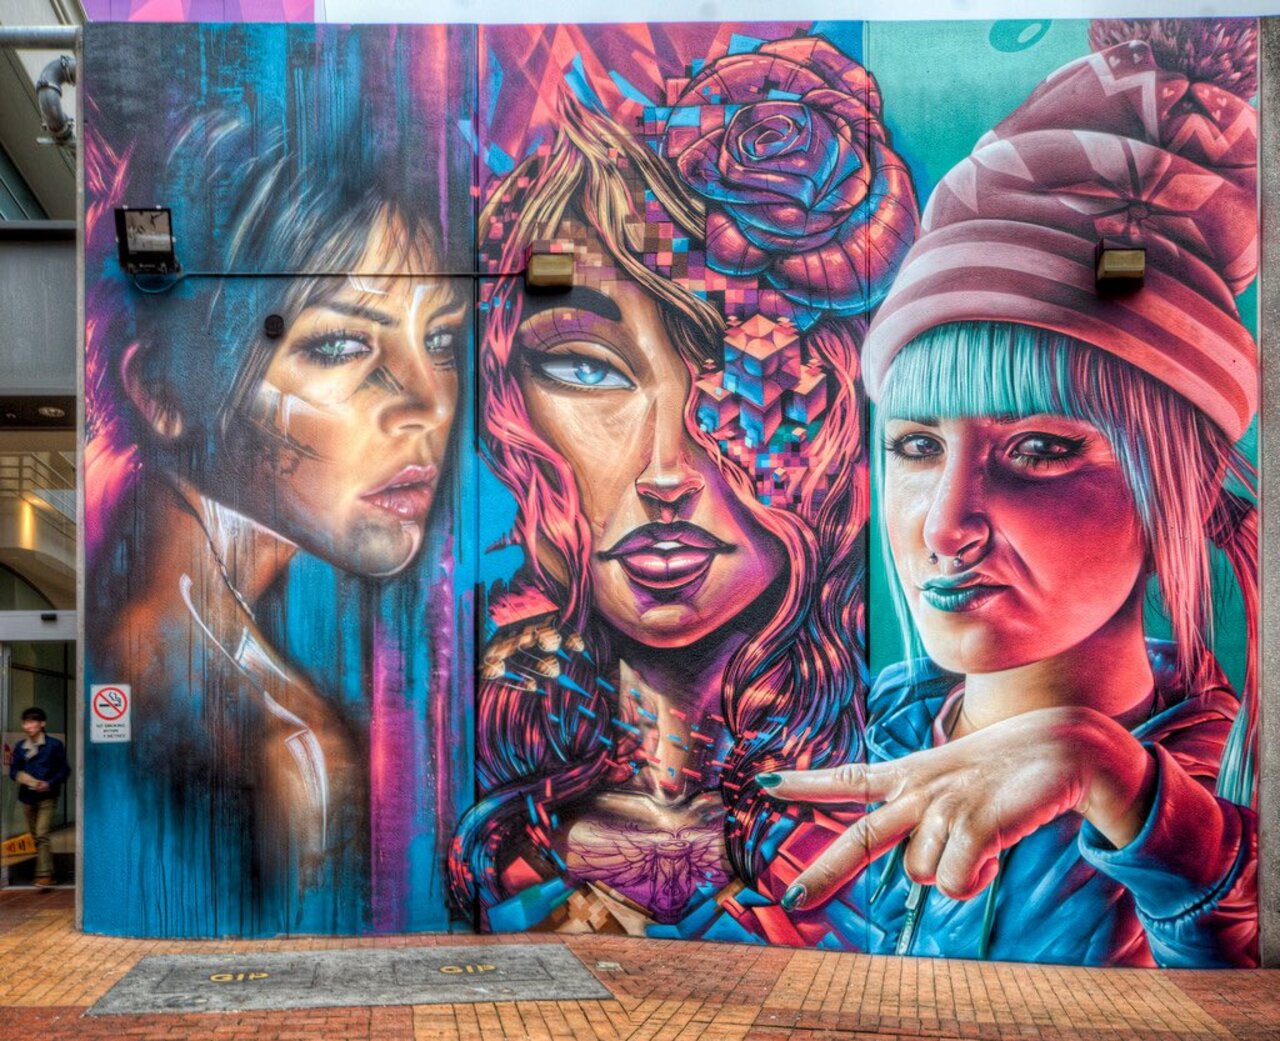 Mural by Adnate, Sofles & Smug One, #Melbourne #Australia #mural #Streetart #urbanart #graffiti #art https://t.co/SDhmRxmWbb